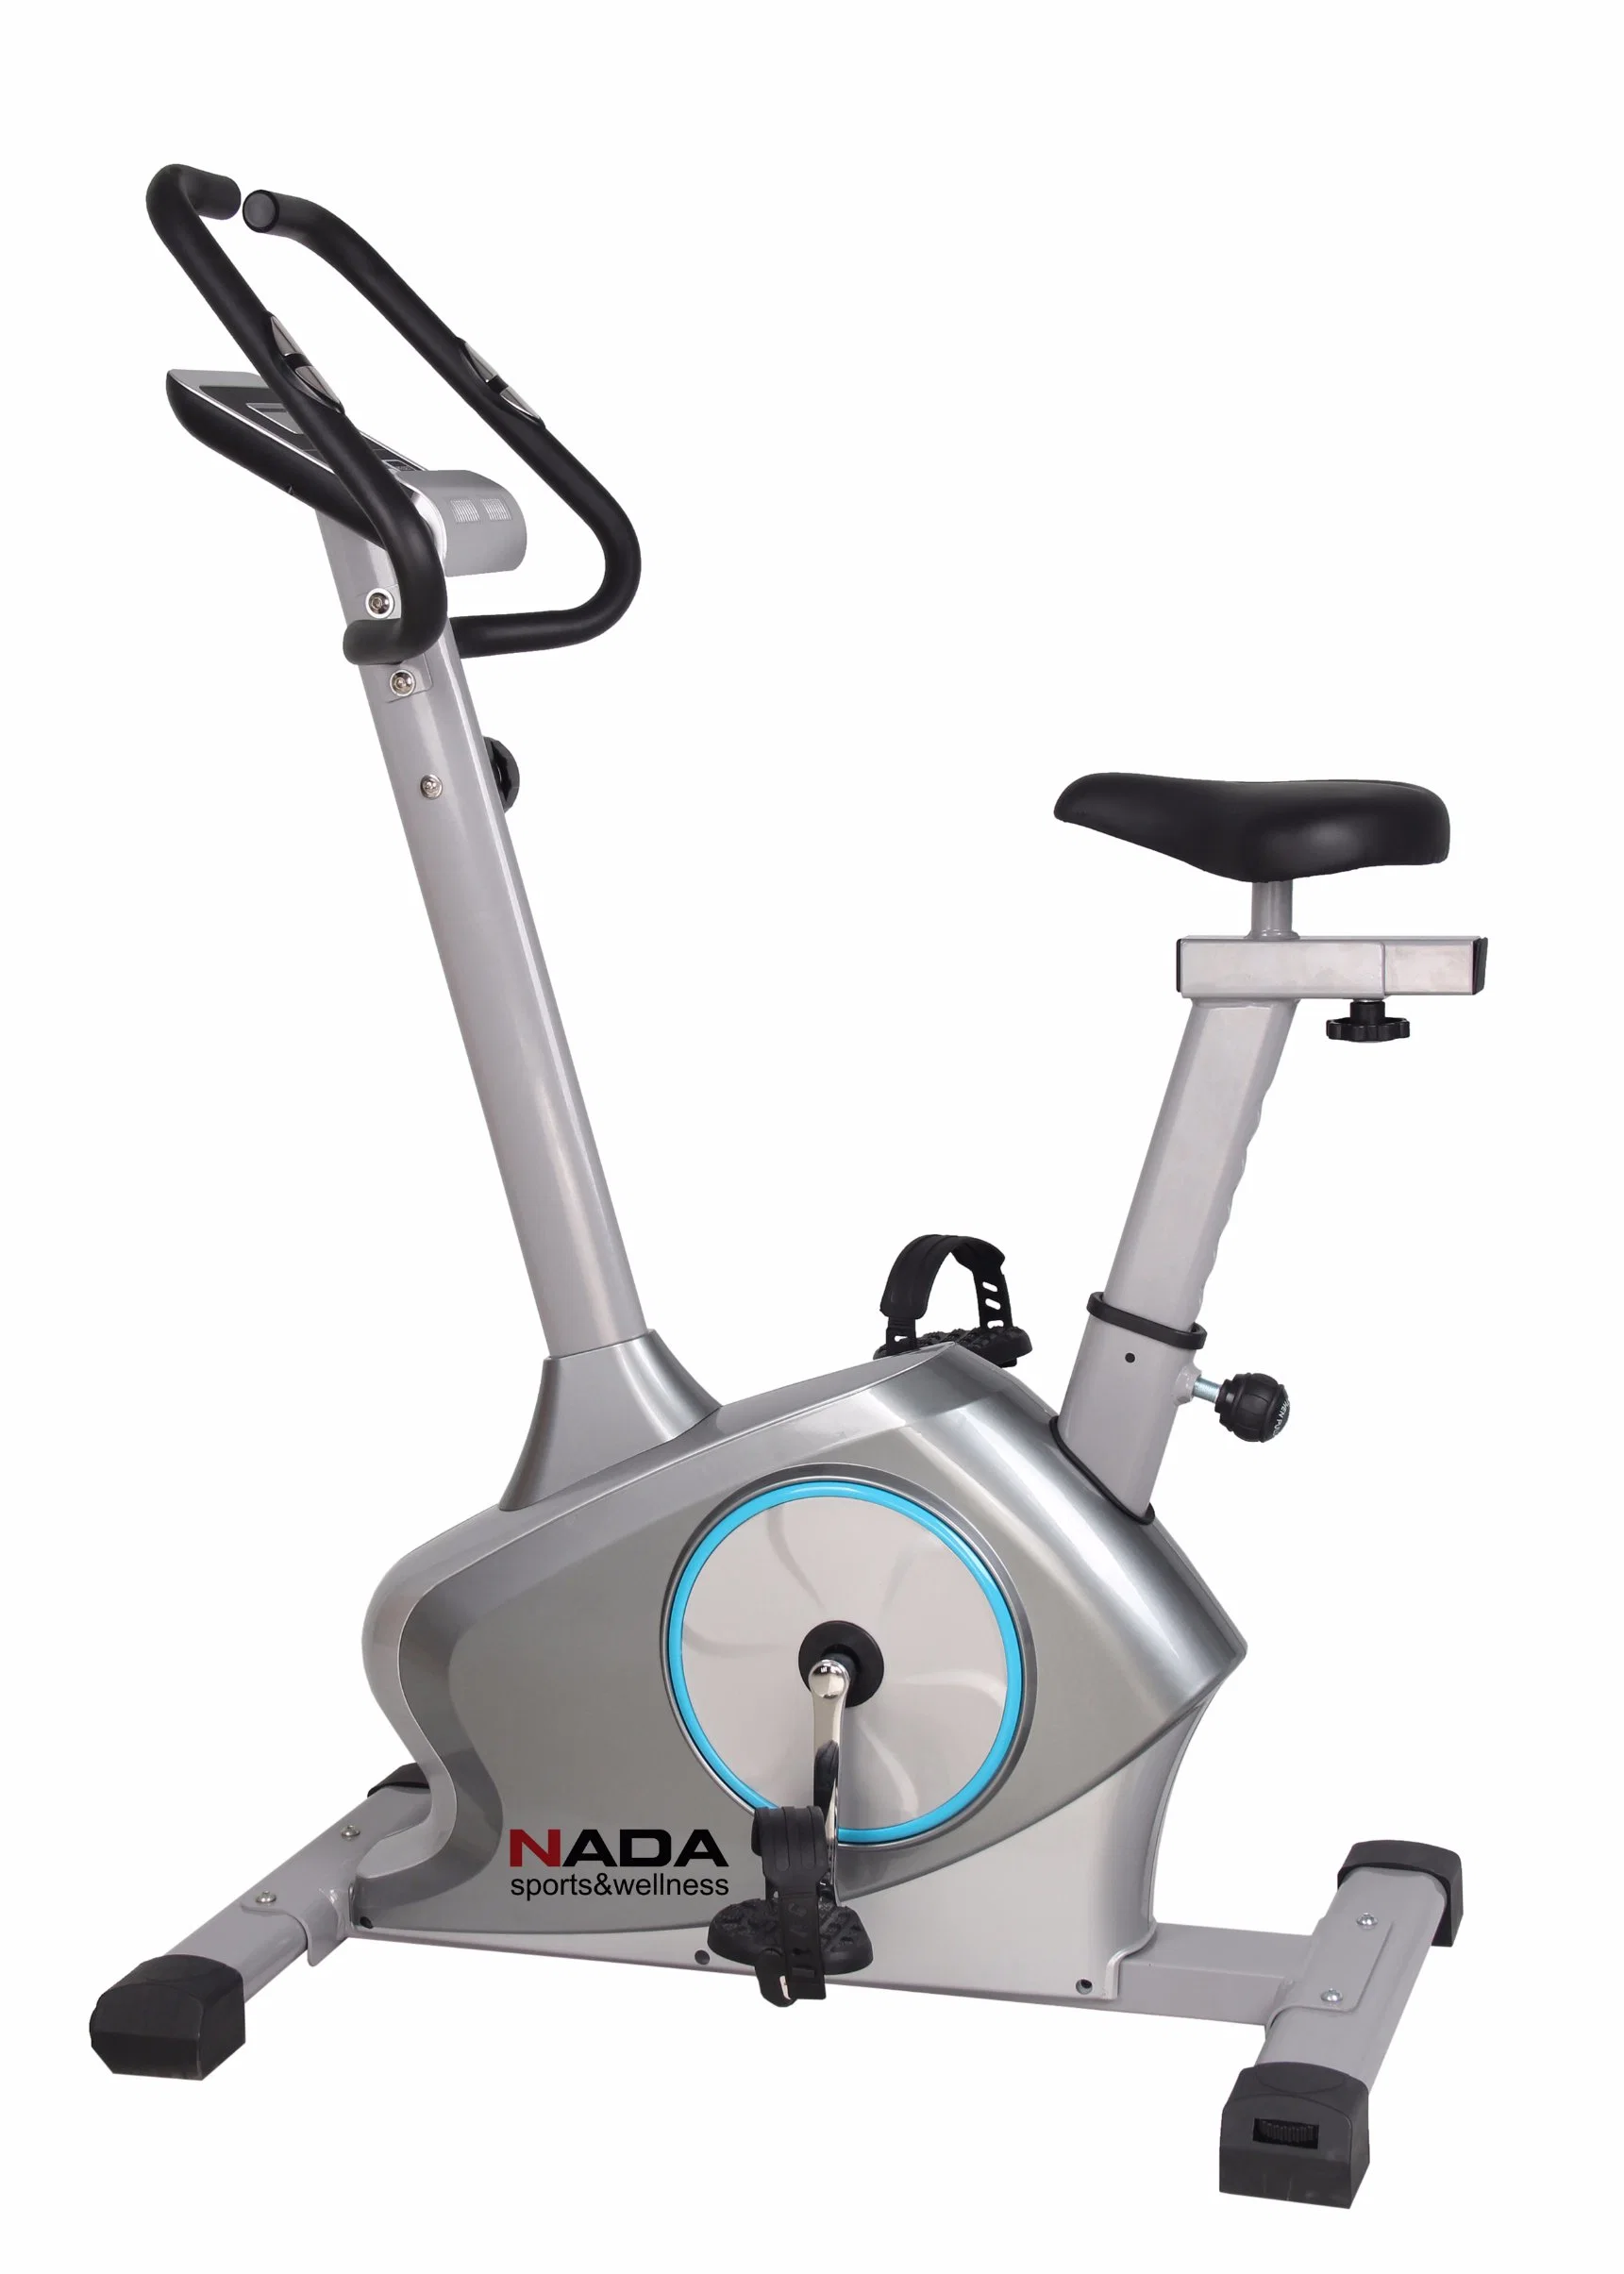 Hot Sale /Fitness/ Programmable/ Elliptical Bike/ Nada Sports/Exercise Machine Elliptical/Desk/Fitness Bicylce Crosstrainer Mini Bike with Stepper/Seat